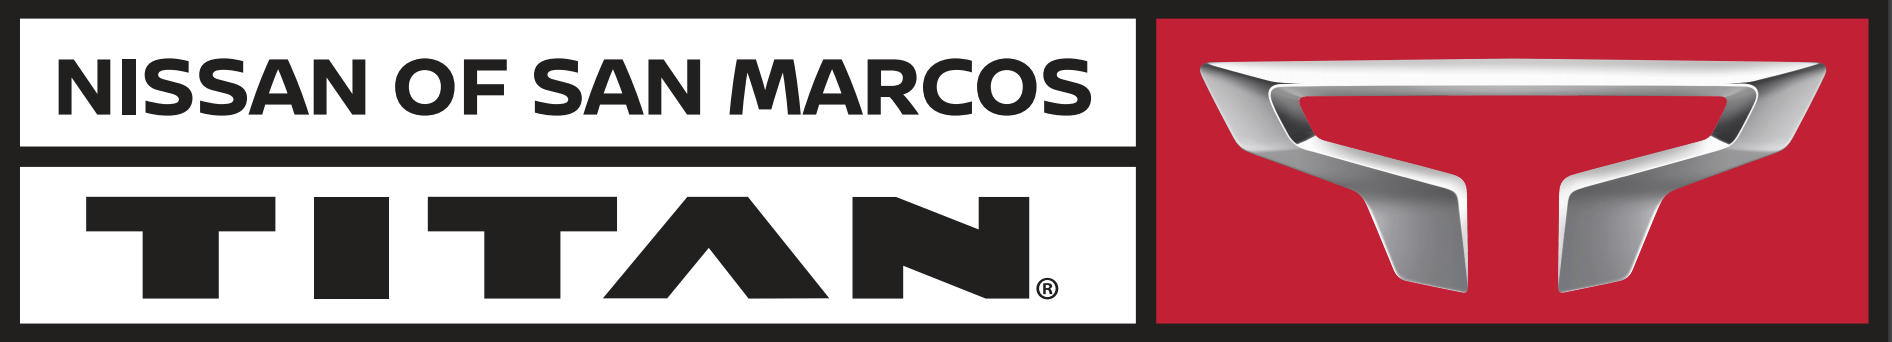 Nissan Titan Logo - Nissan Titan Information. Nissan of San Marcos